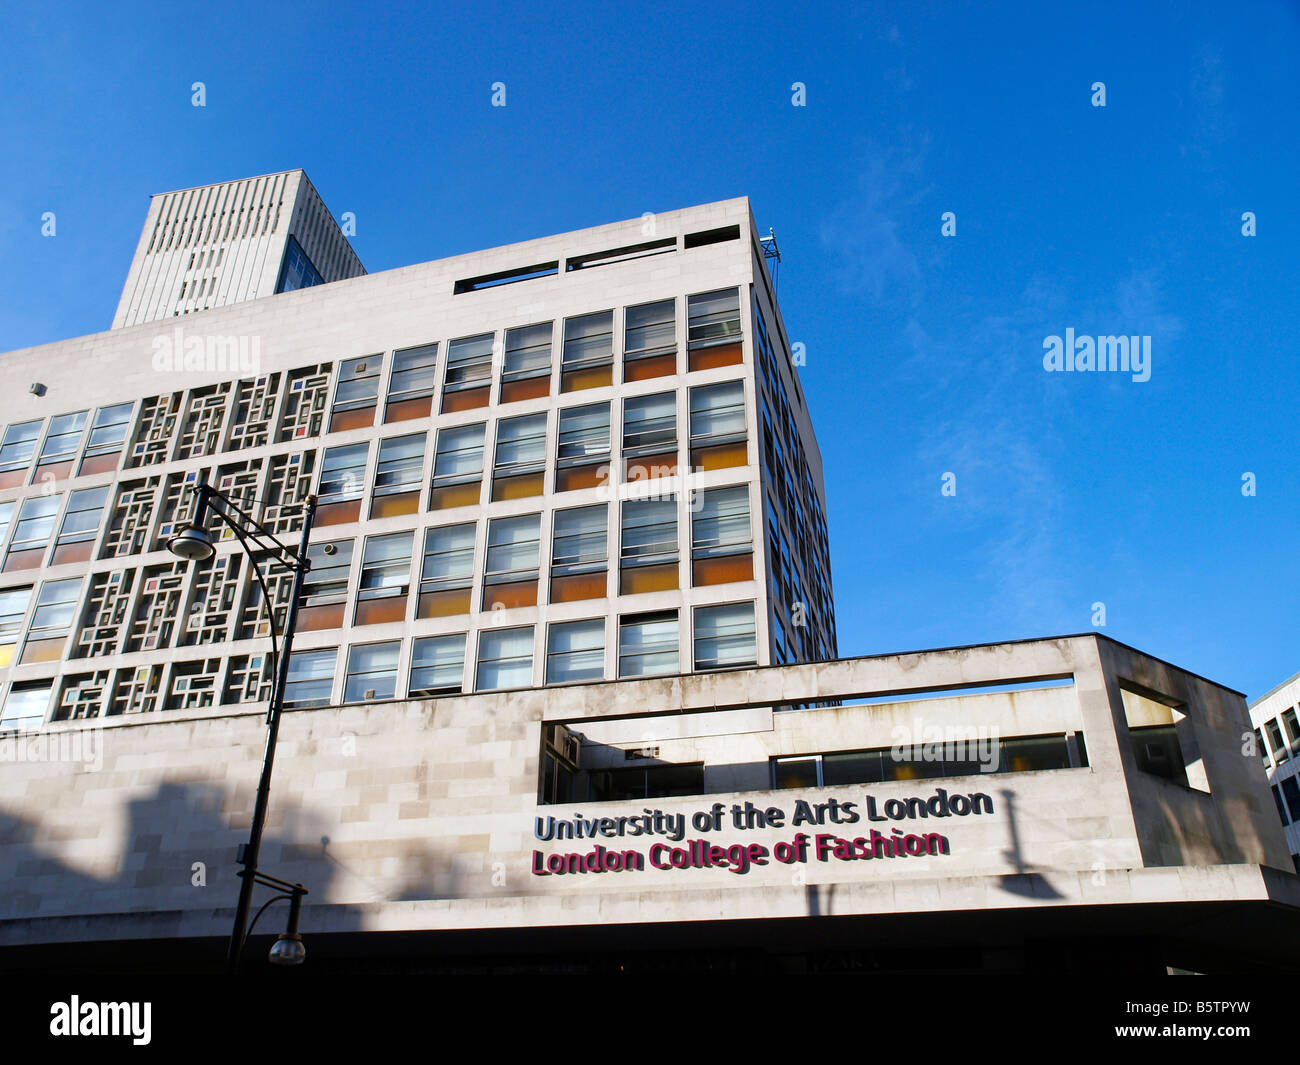 London College of Fashion, University of the Arts Oxford Street London Stock Photo